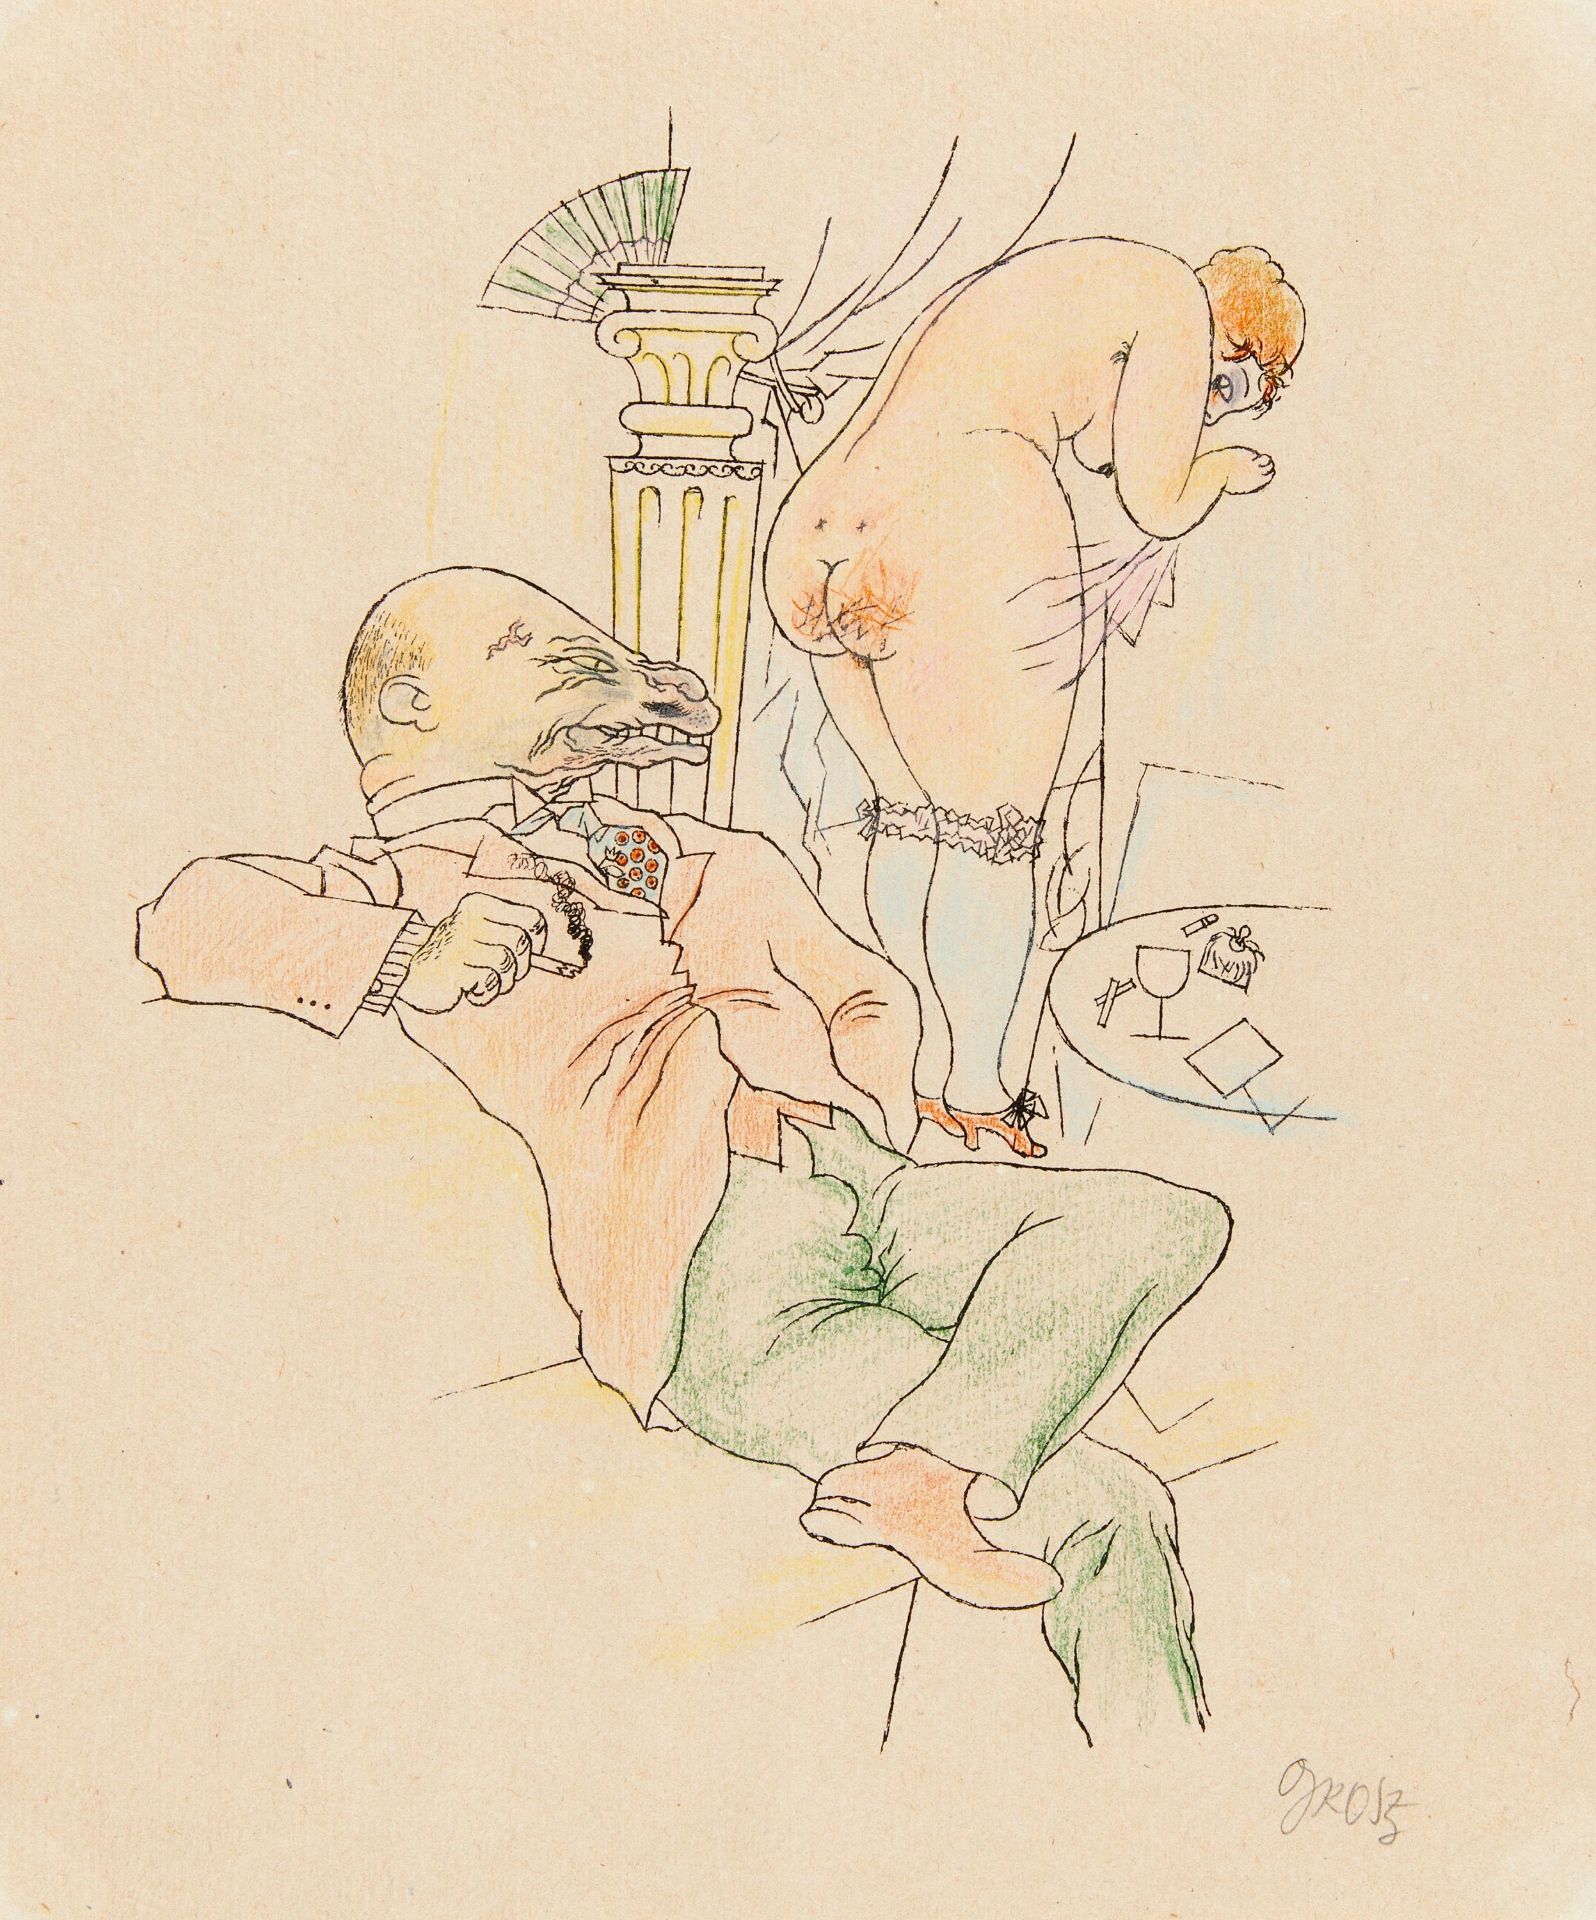 Grosz, George Berlin 1891 - 1959 Meine Kegelbahn. 1920/21. Kolorierte Lithografie auf Japan. 29 x